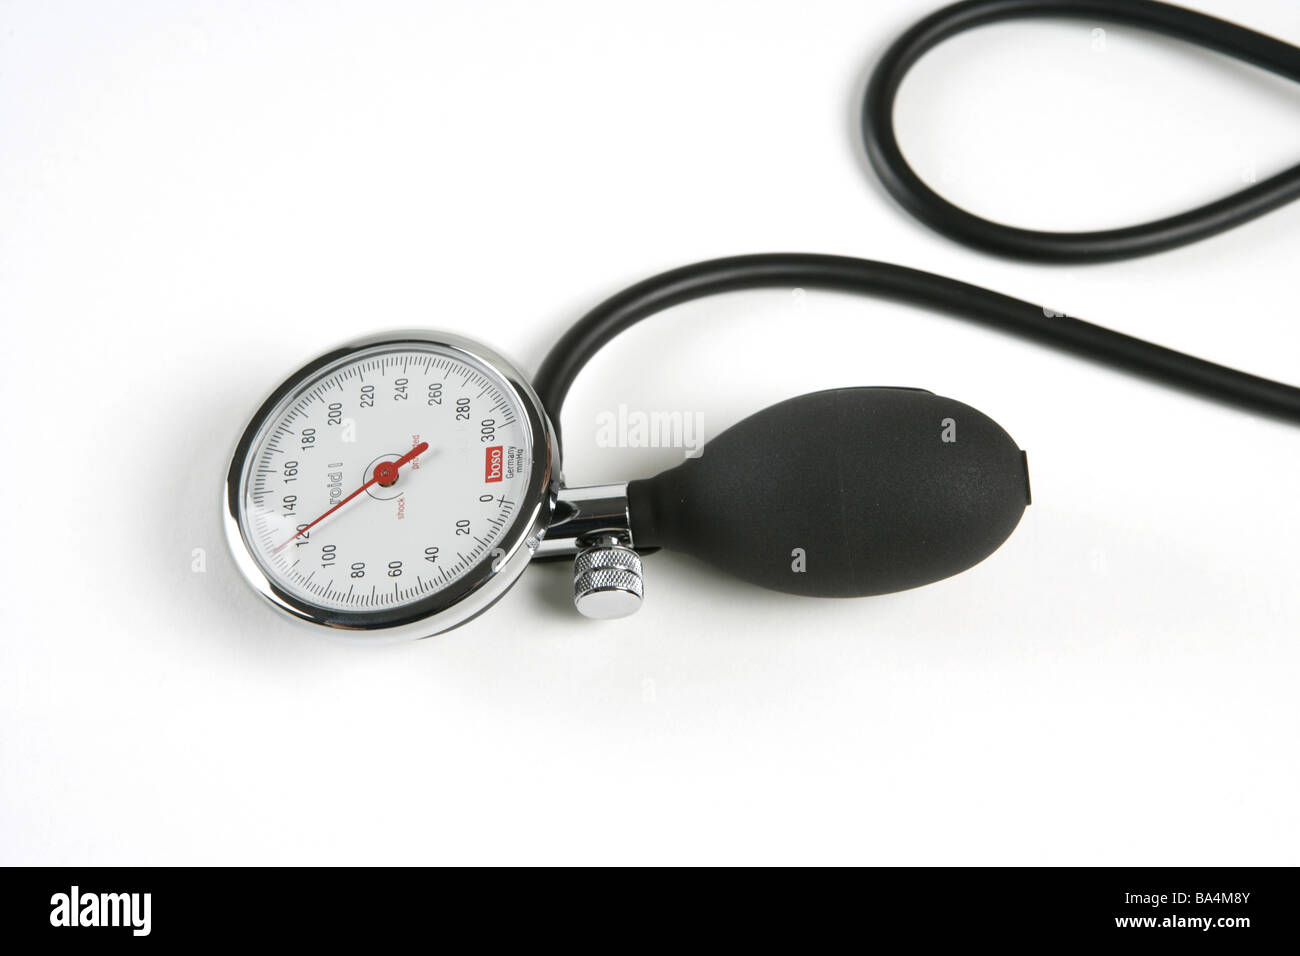 https://c8.alamy.com/comp/BA4M8Y/blood-pressure-measuring-instrument-blood-pressure-measurement-blood-BA4M8Y.jpg